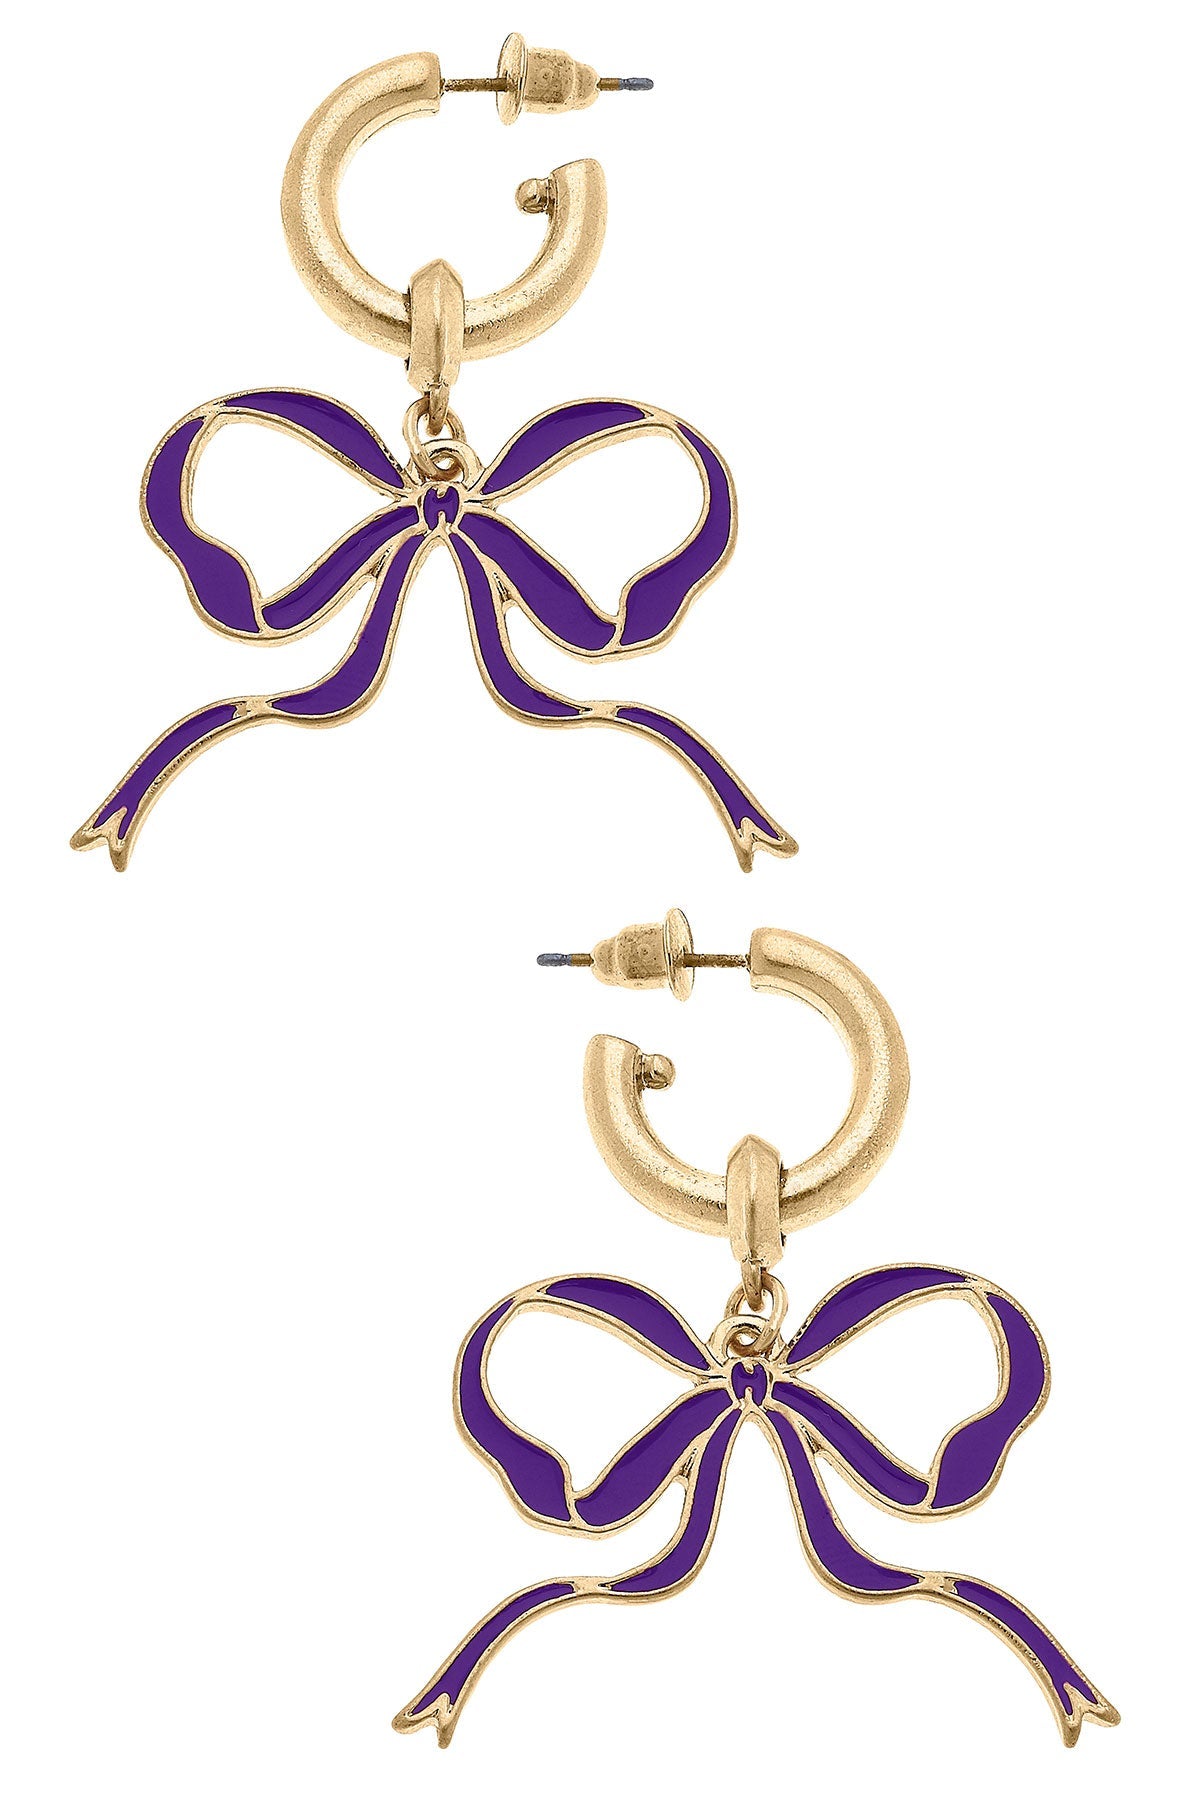 Veronica Game Day Bow Enamel Earrings in Purple by CANVAS